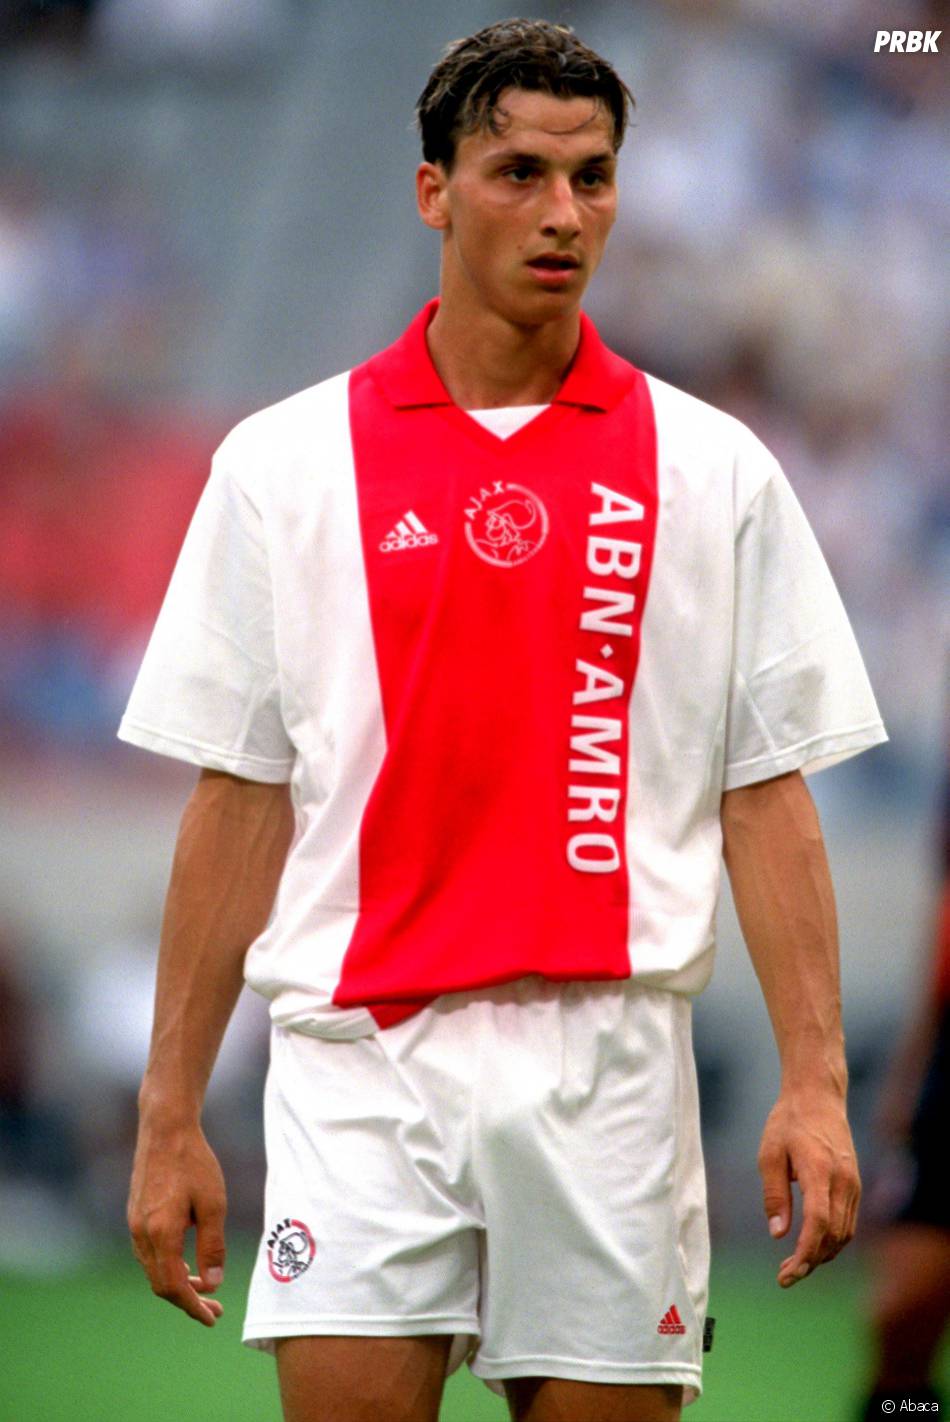  Zlatan Ibrahimovic 2001 